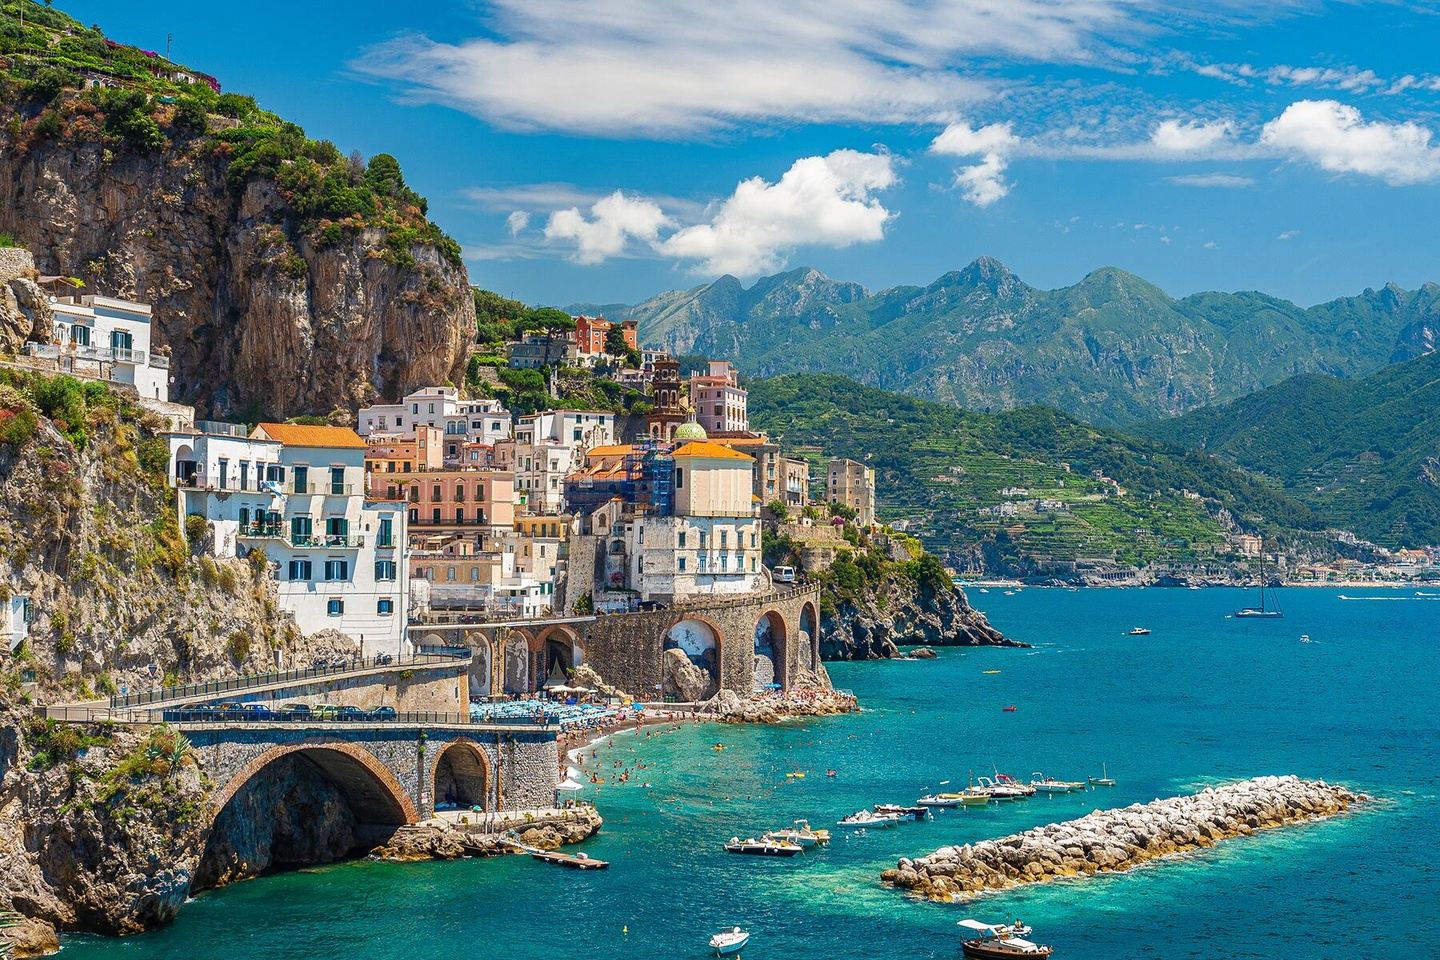 Explore the Beautiful Amalfi Coast by Bike!